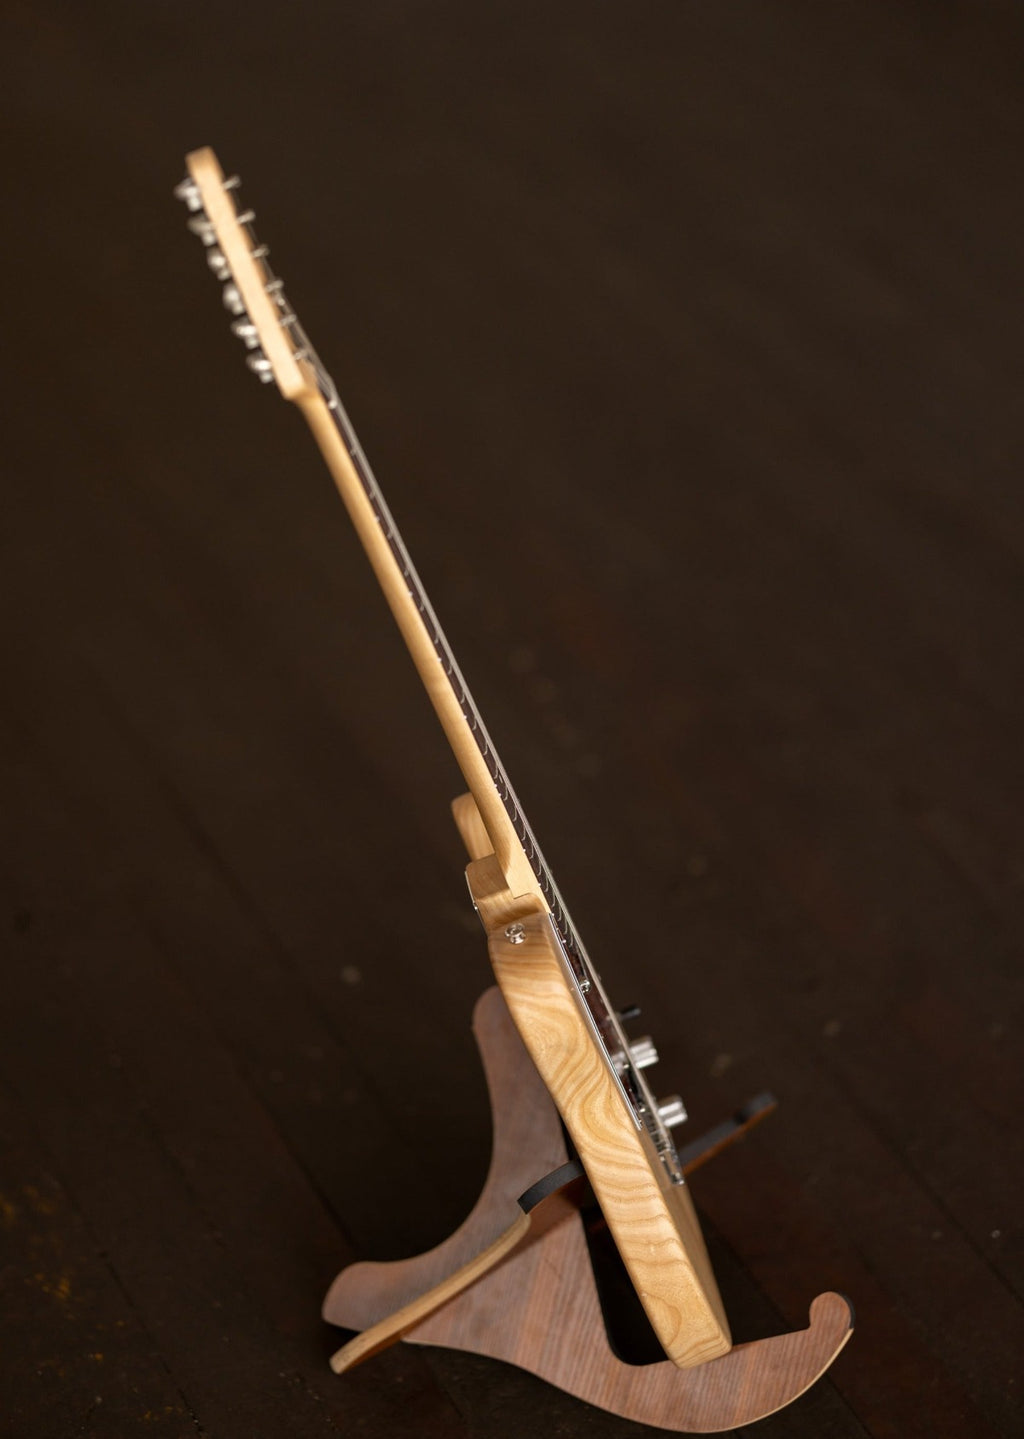 Sawyer Model A No: 1 | Sawyer Guitars | Fender Telecaster Replica on stand